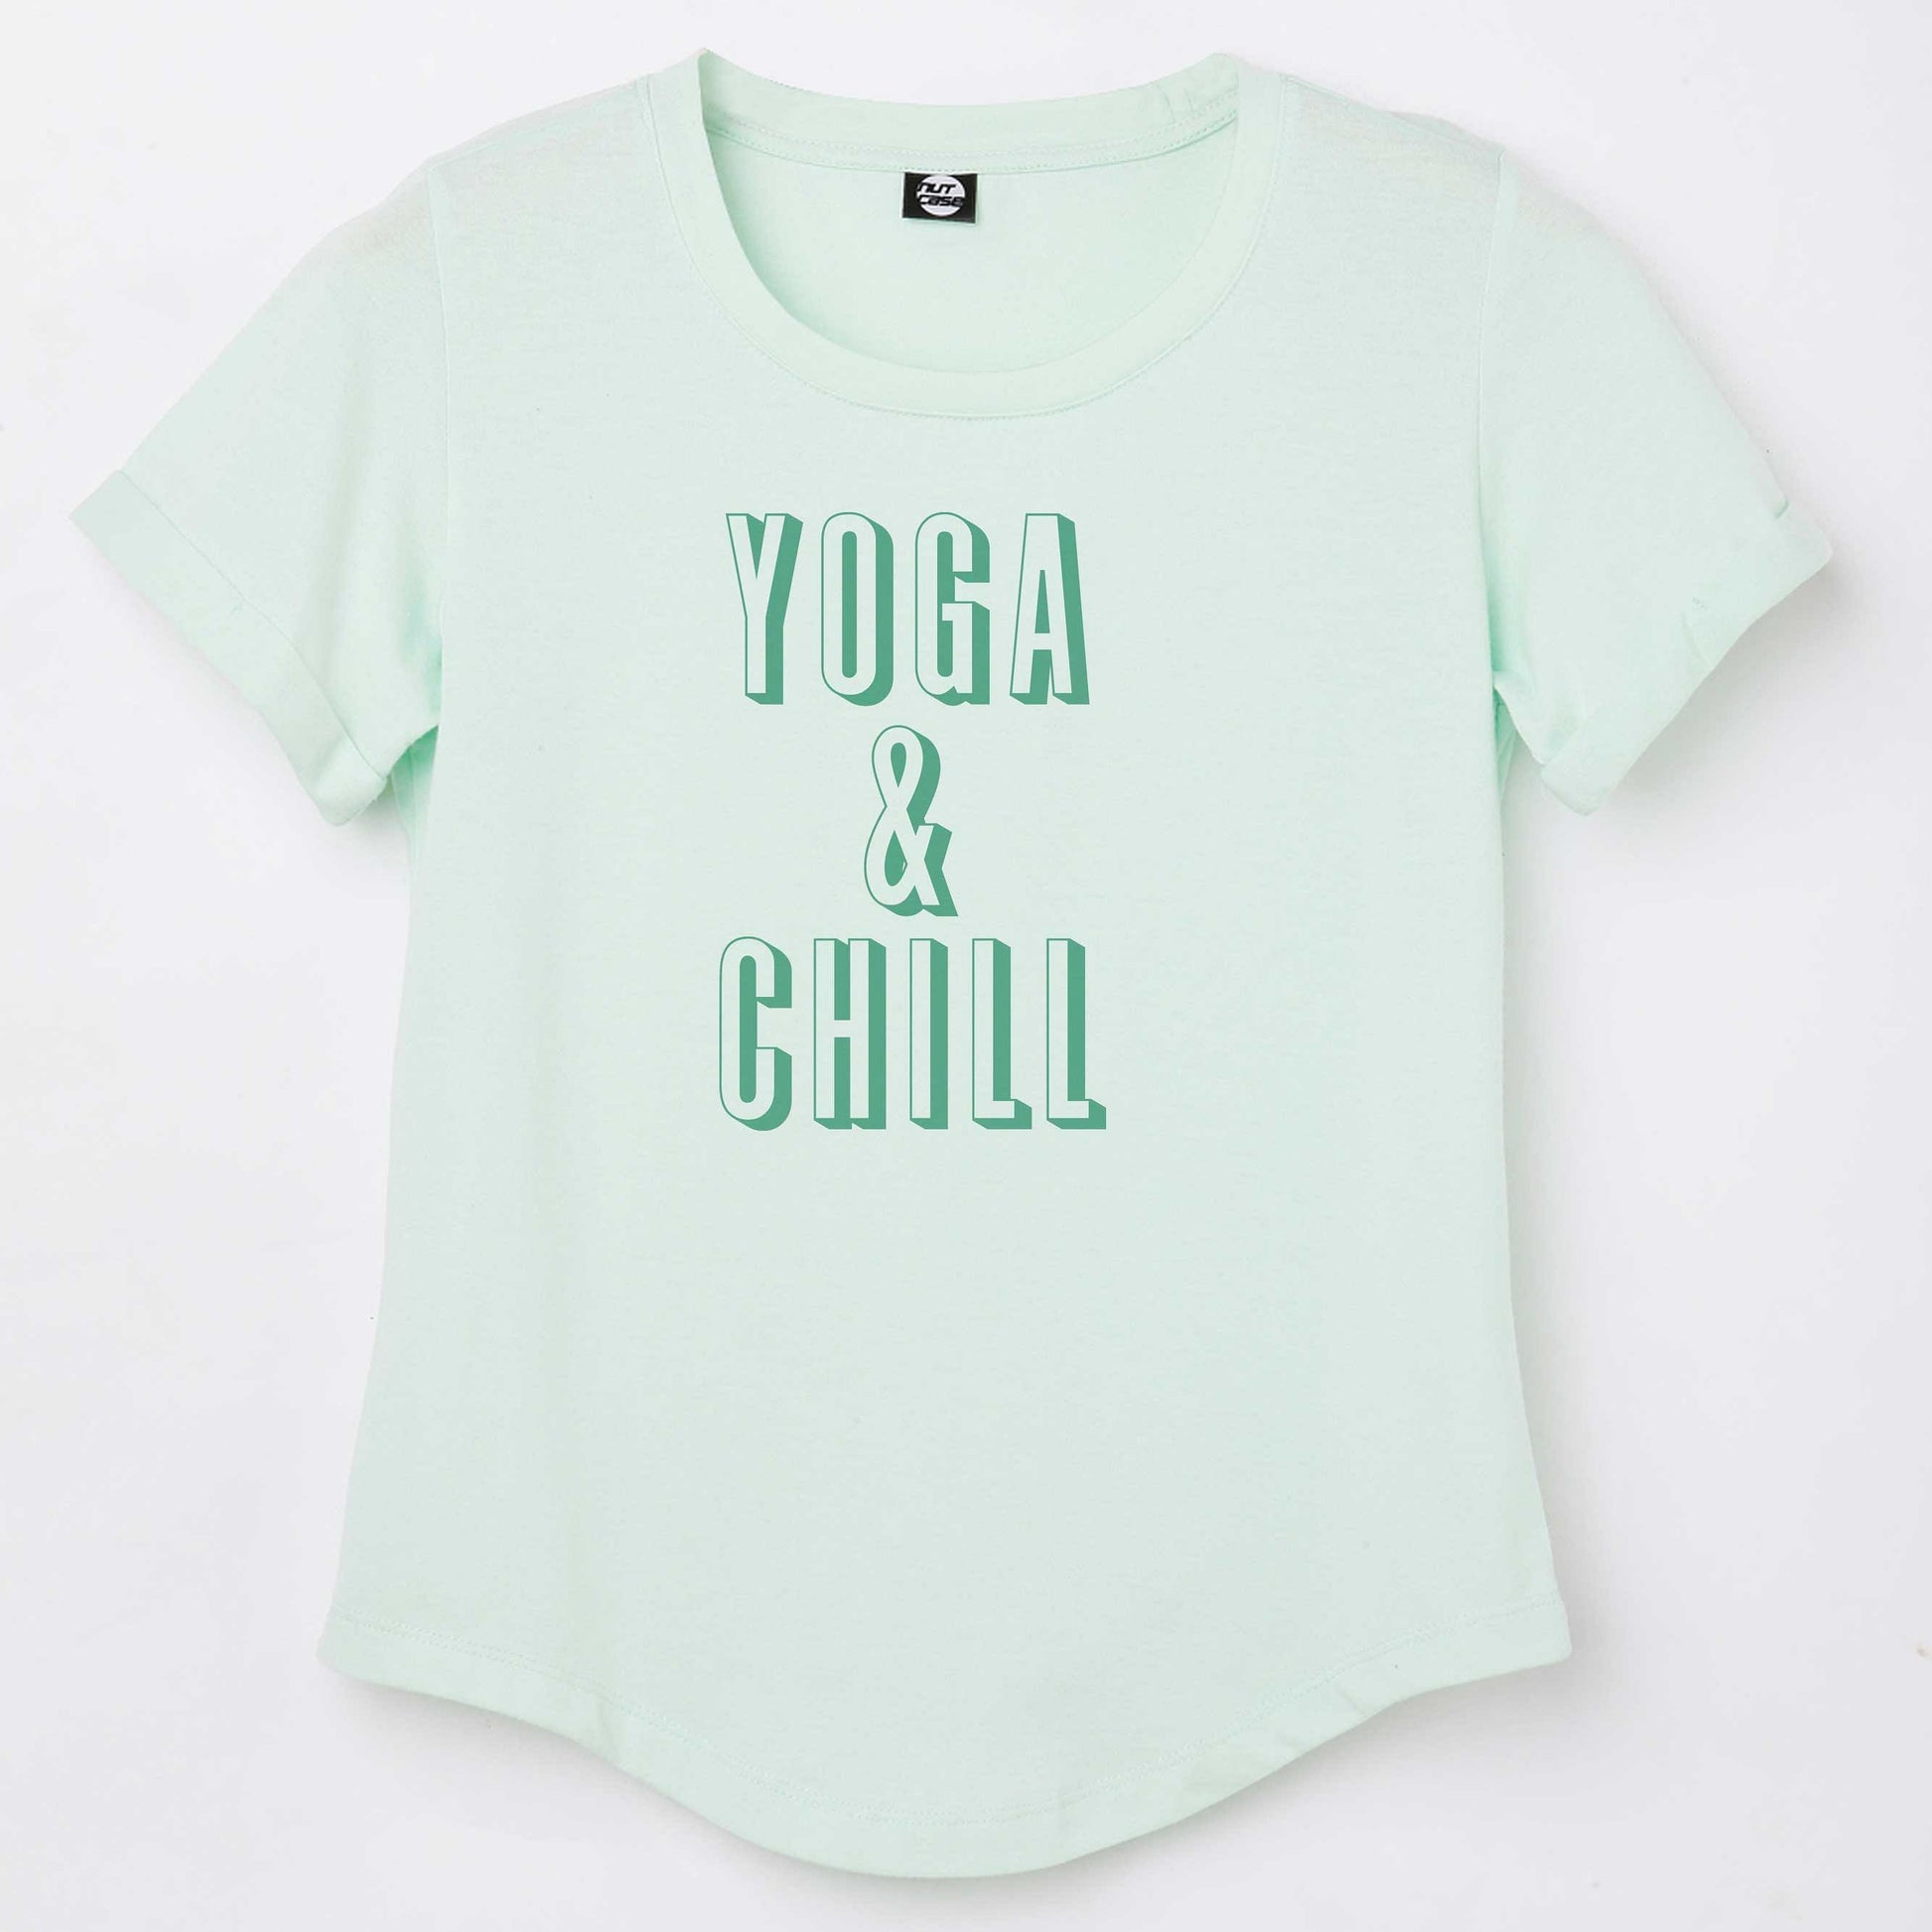 Women's Yoga Tee Exercise Tshirts For Girls  - Yoga Chill Nutcase